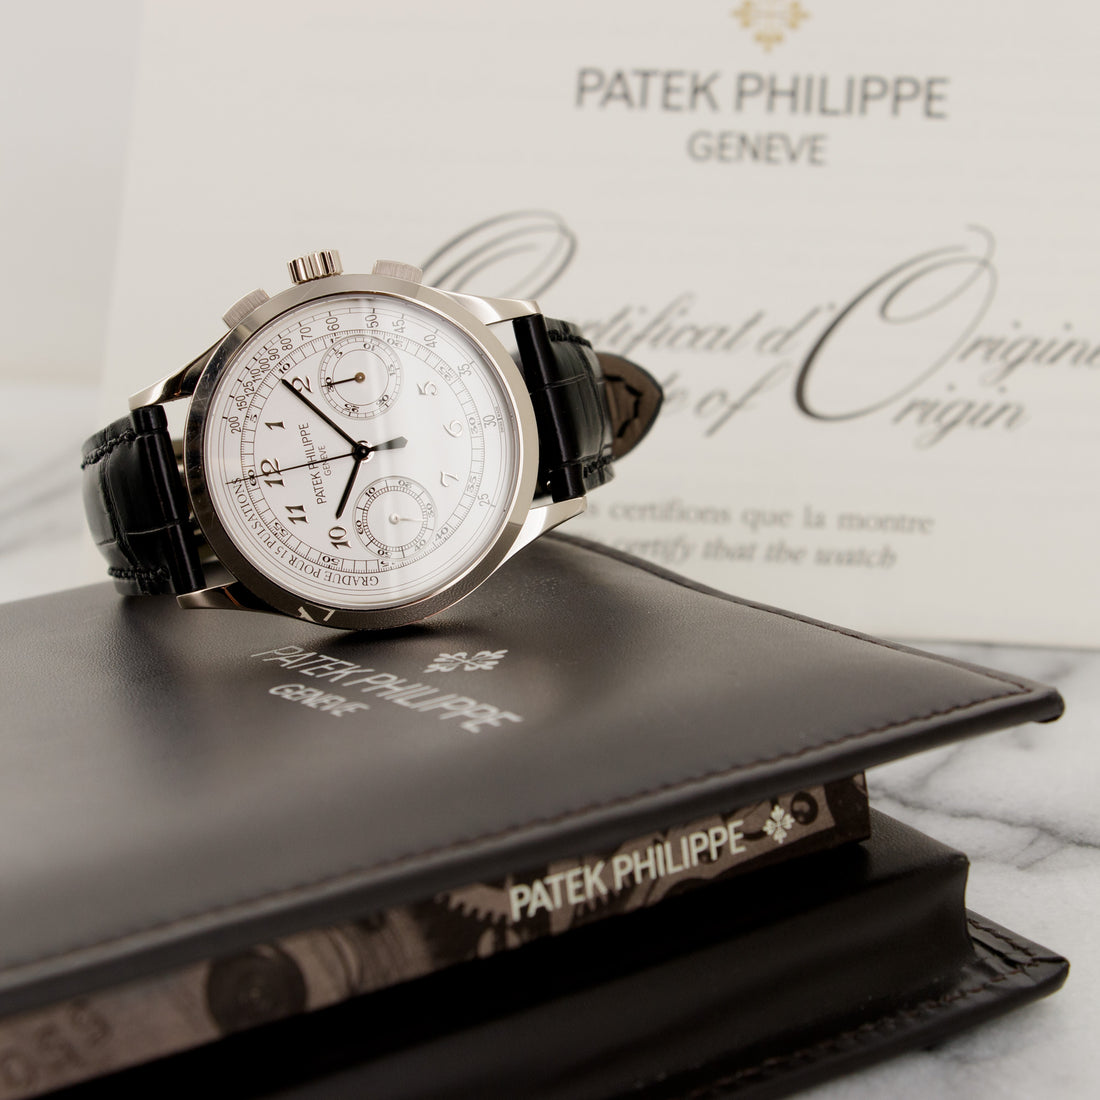 Patek Philippe White Gold Chronograph Watch Ref. 5170